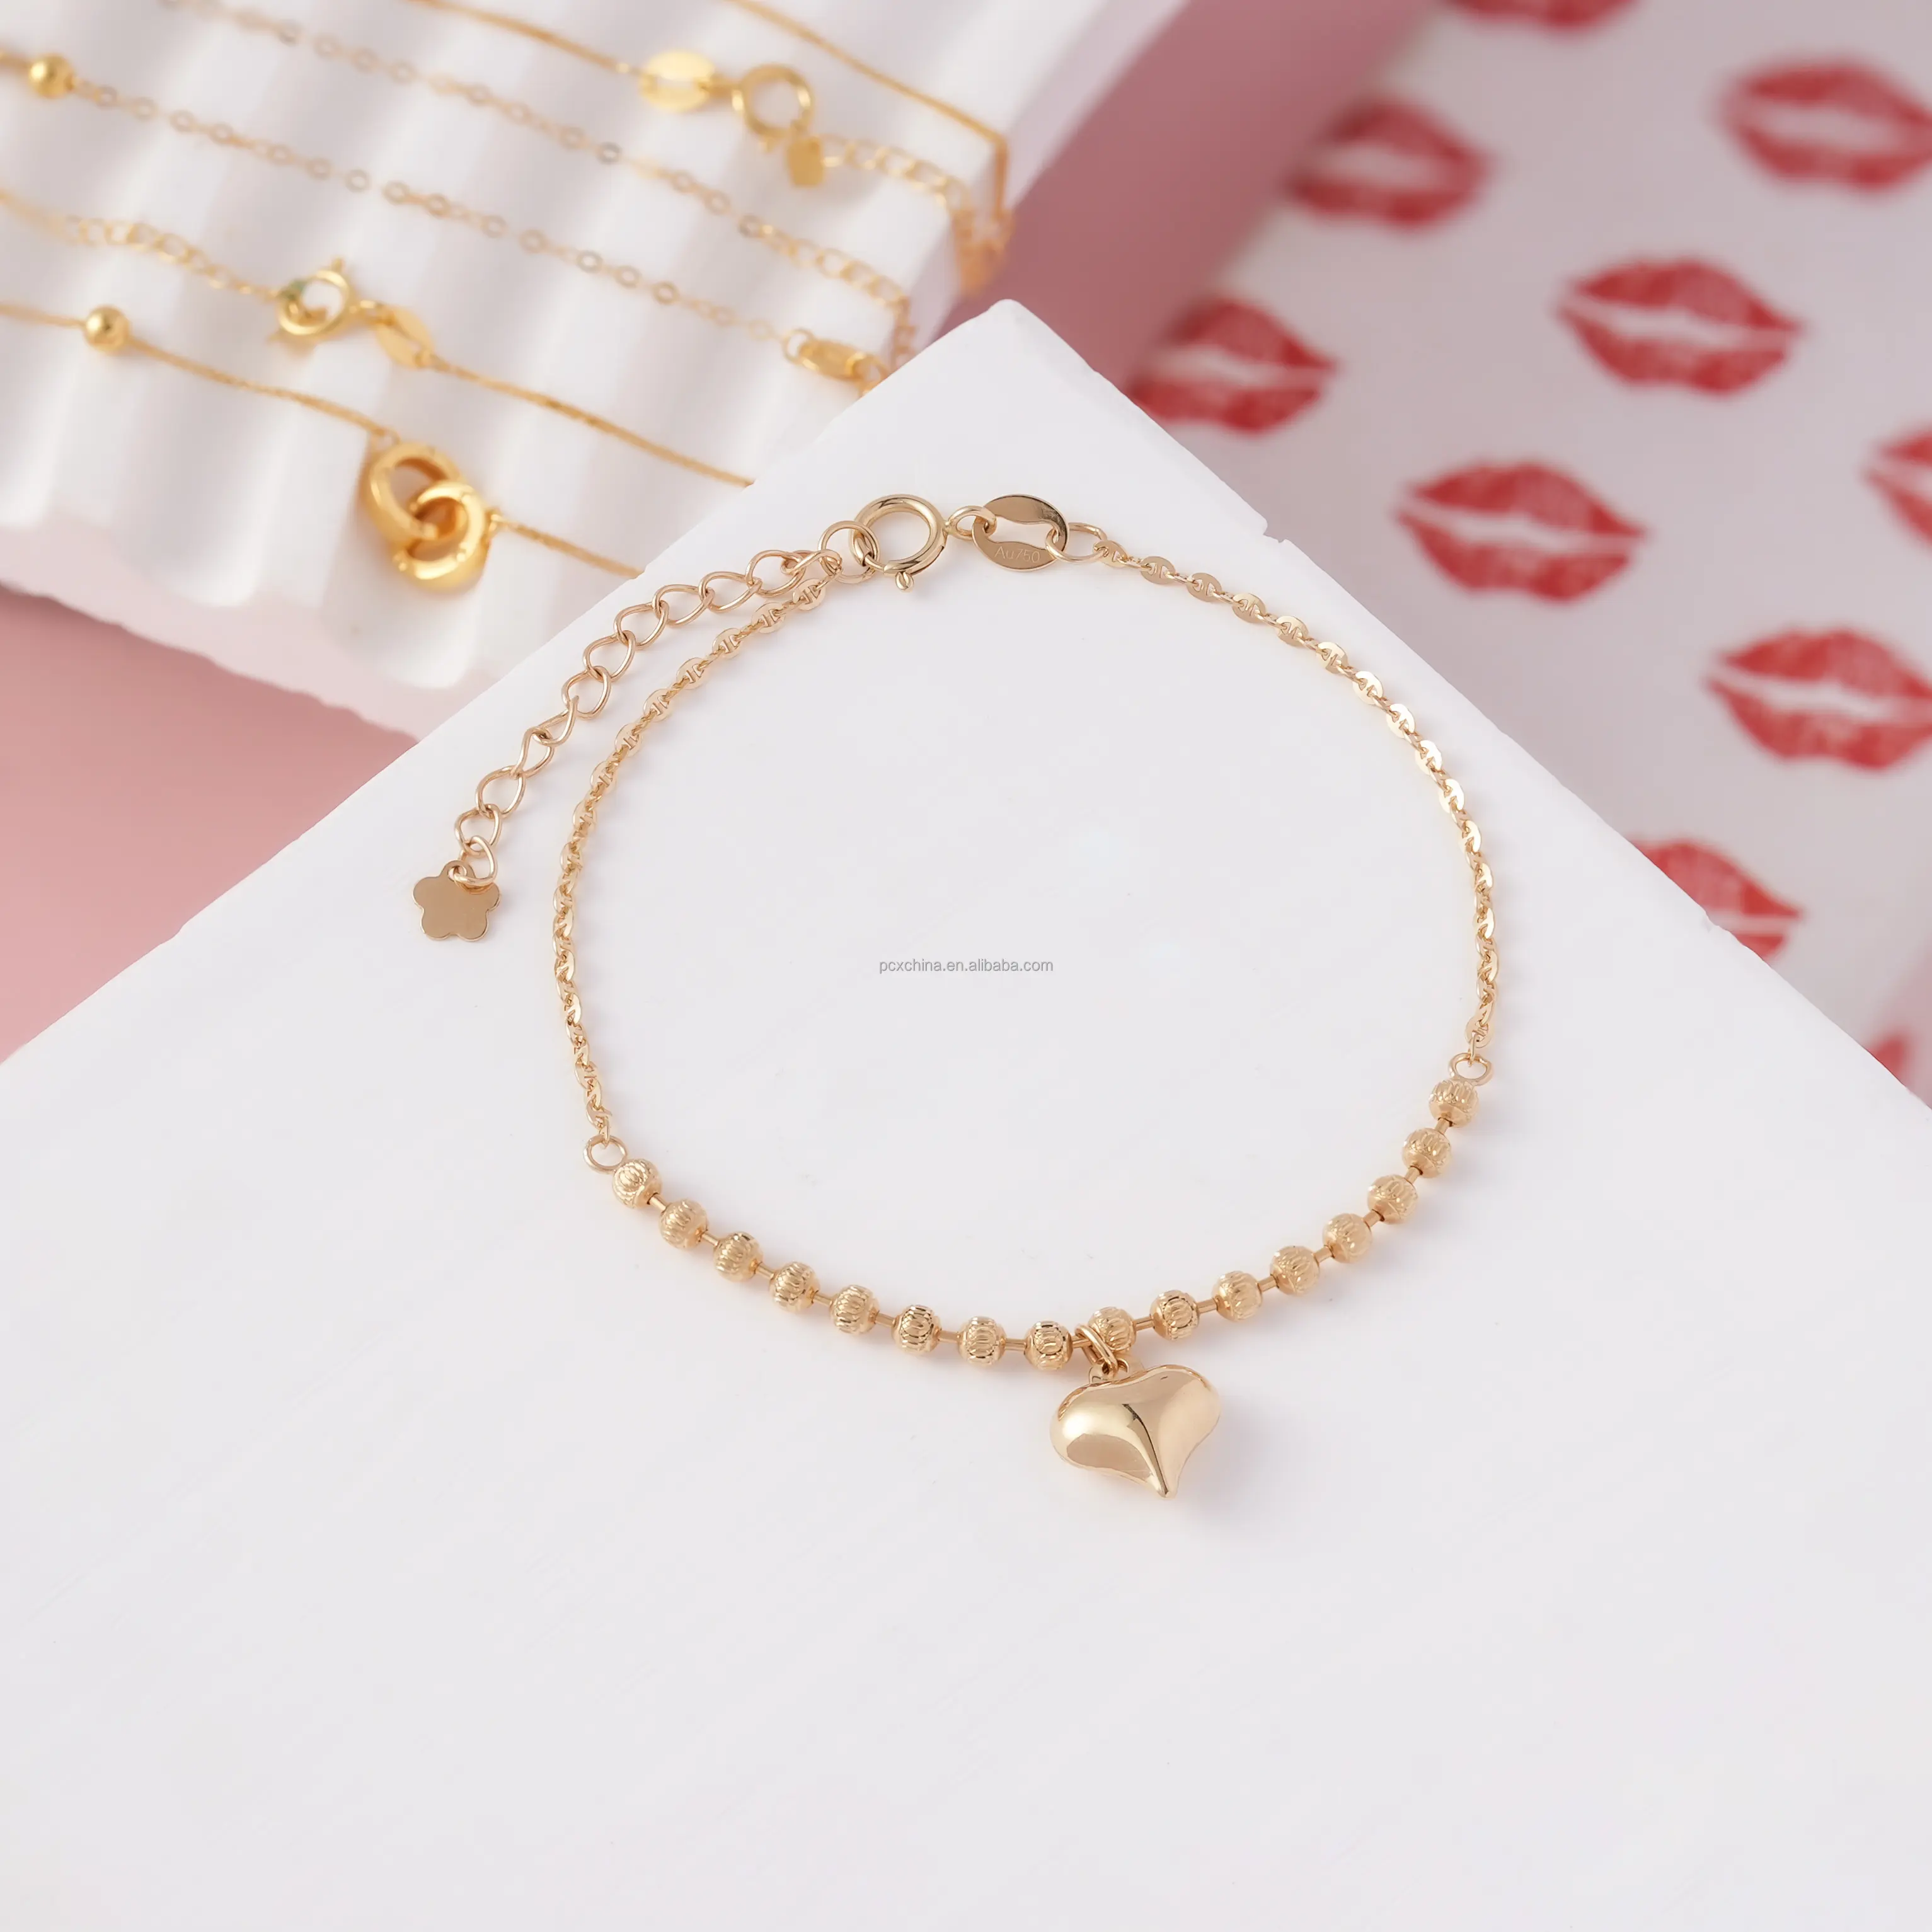 Hot Selling Heart Pendant Ornaments Chain Gift Women's 14k 18k 10k pure gold choker Love pendant Vegan gold accessory necklace